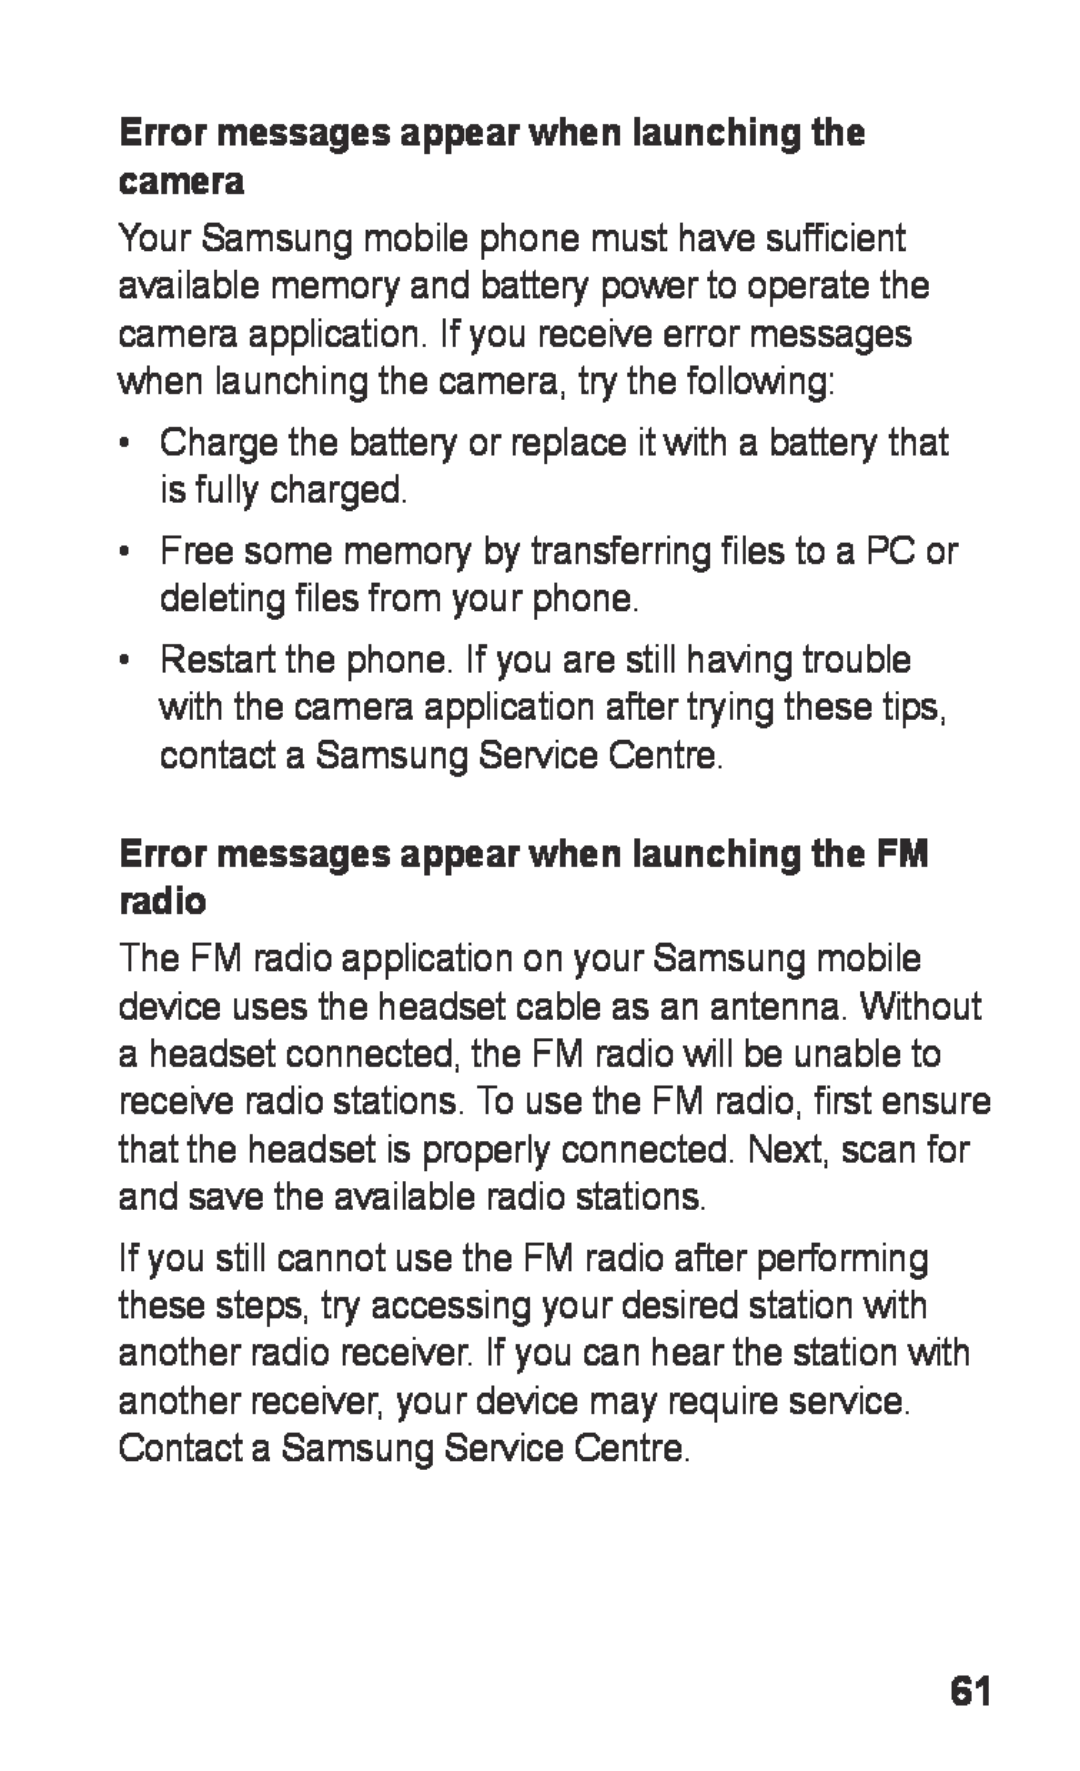 Samsung GT-S5260OKPDBT Error messages appear when launching the camera, Error messages appear when launching the FM radio 